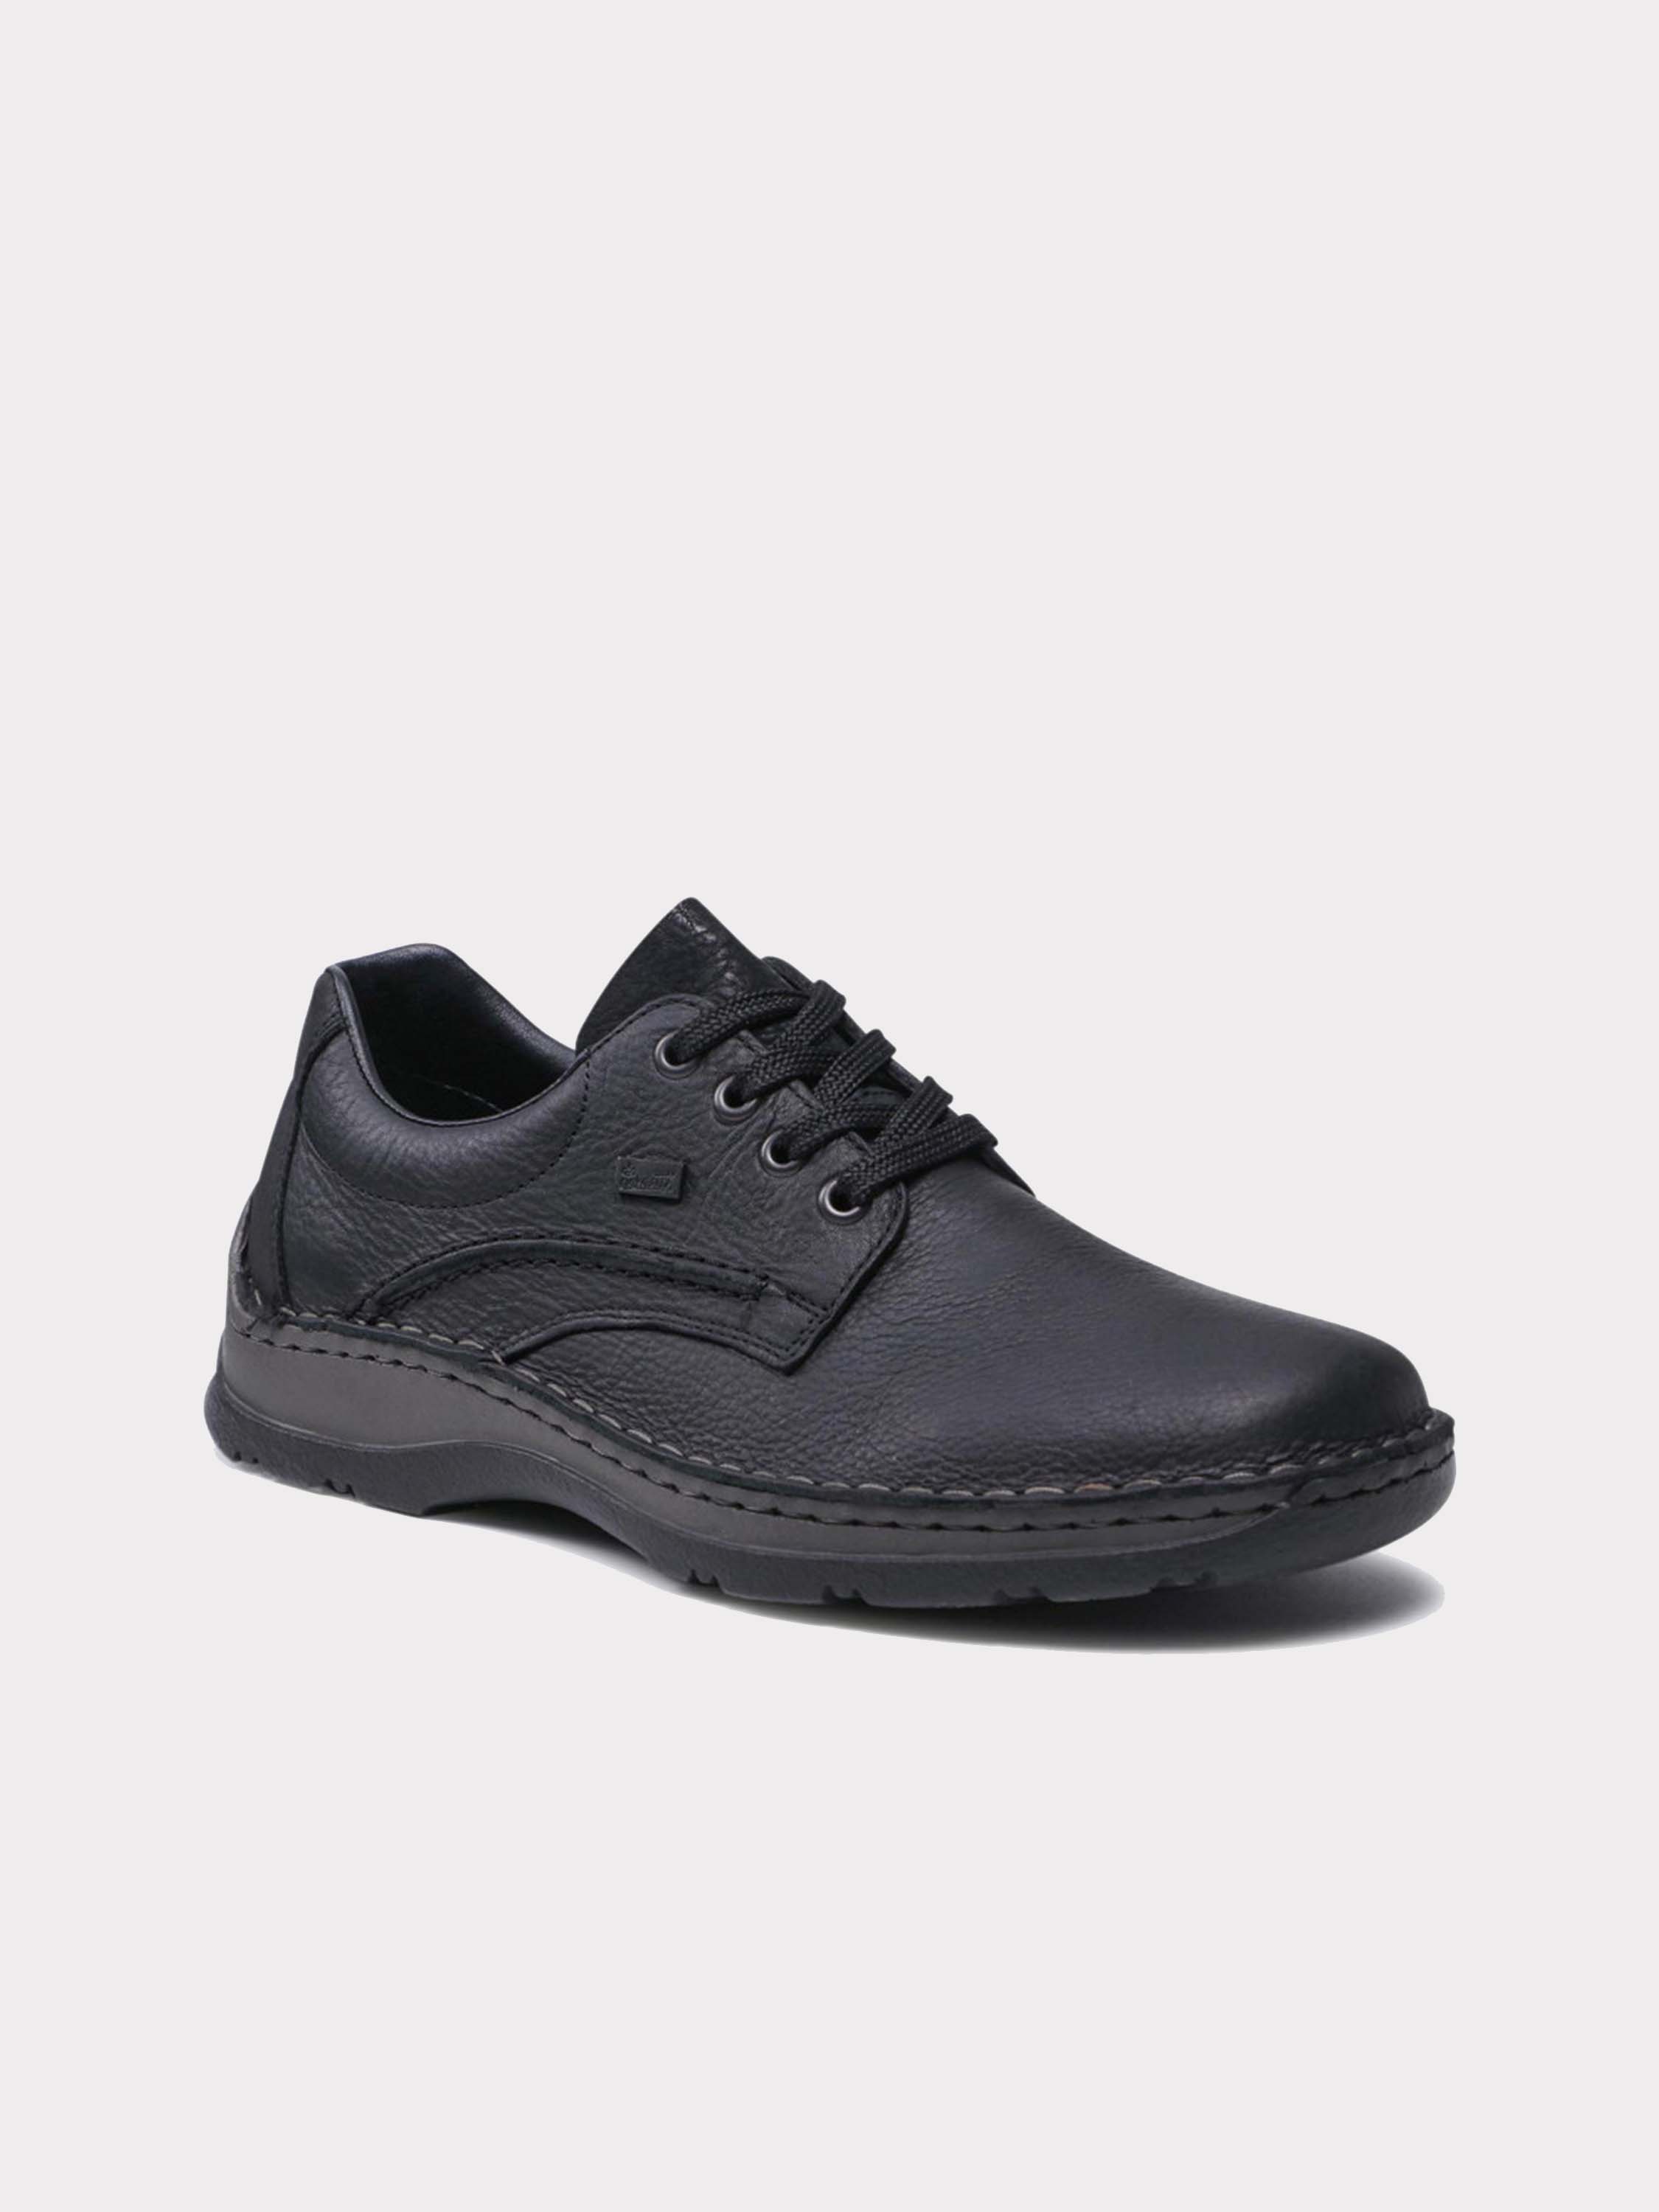 Rieker 05310 Tex Casual Lace Up Leather Shoes #color_Black